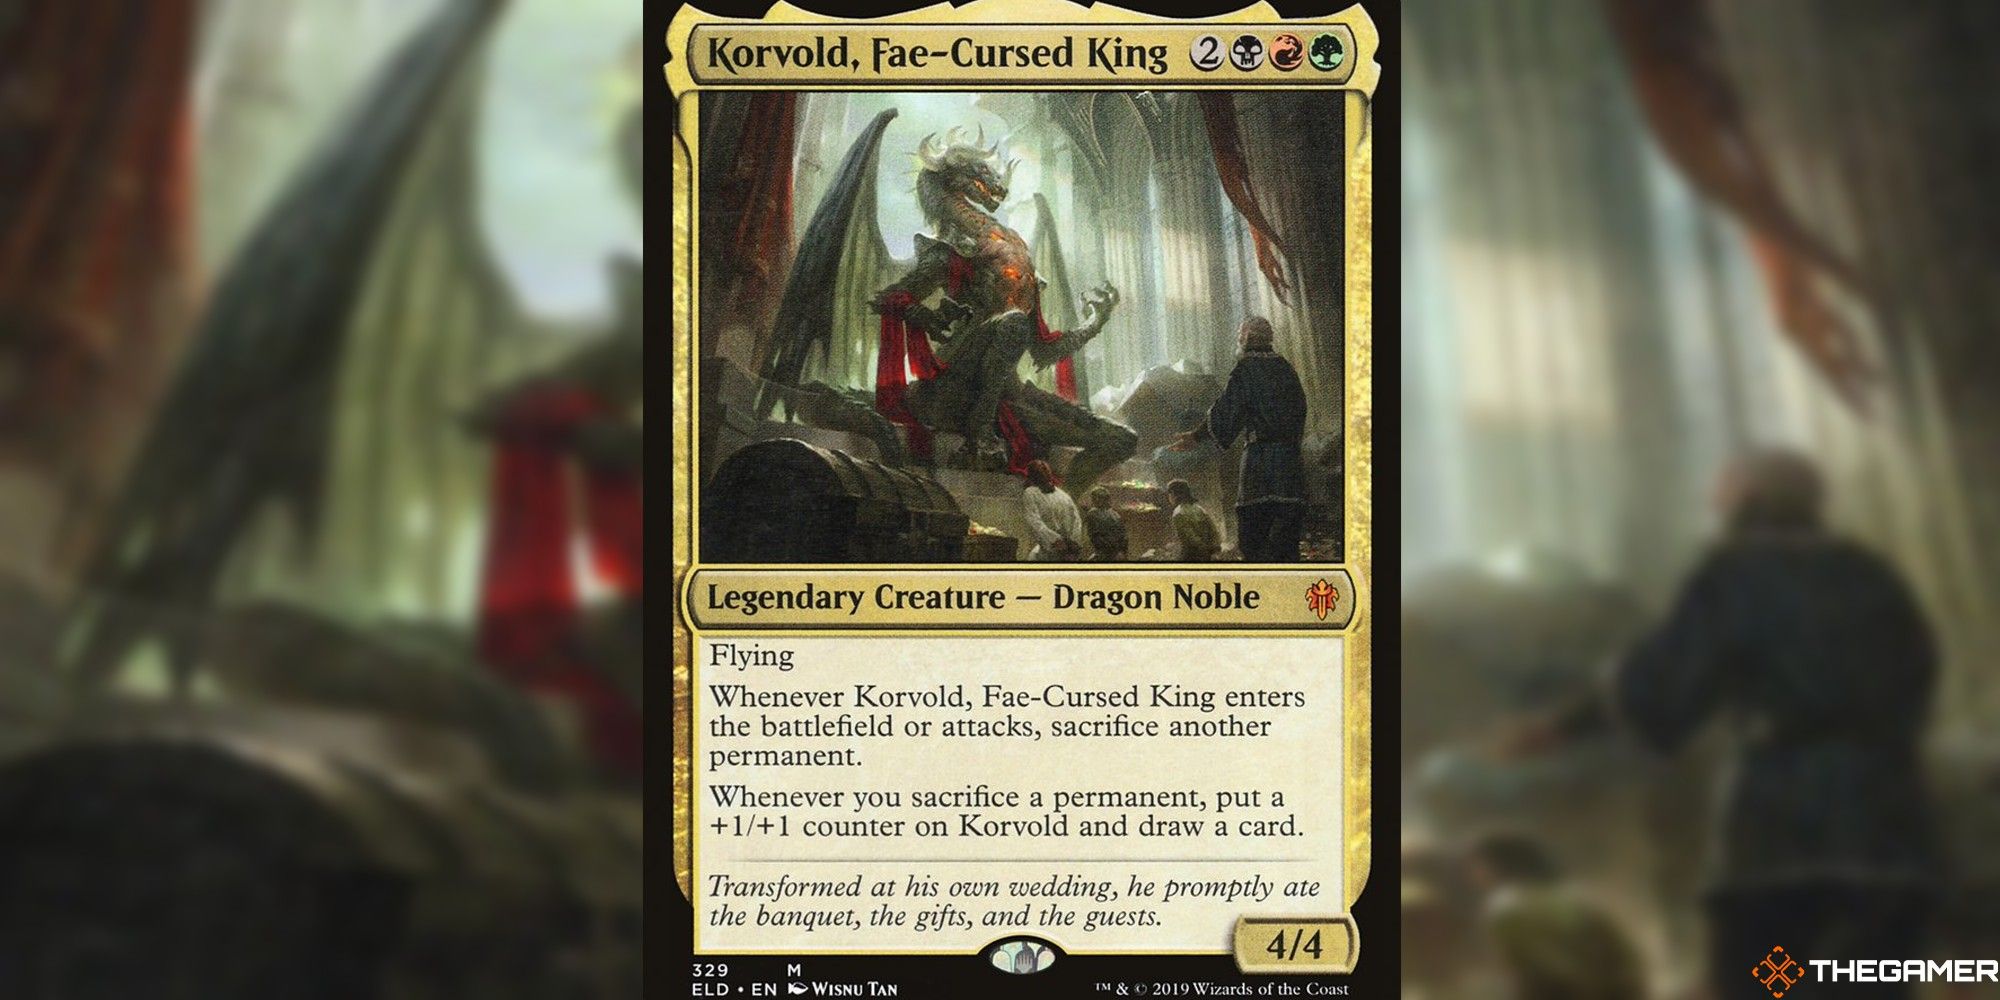 mtg korvold, fae-cursed king full card and art background